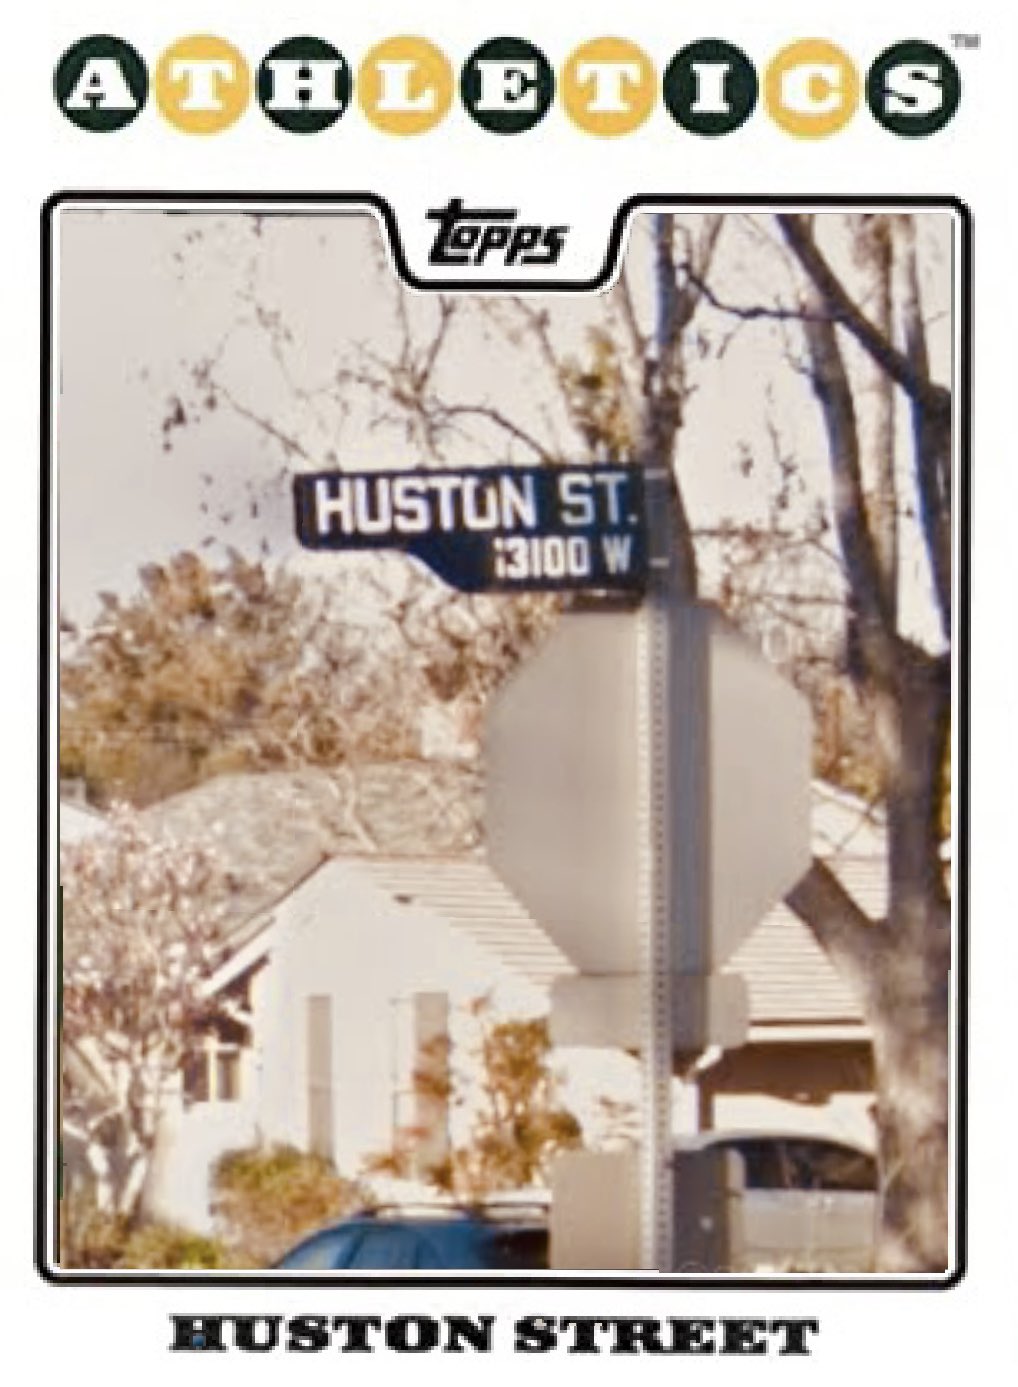 Happy 39th birthday Huston Street! 